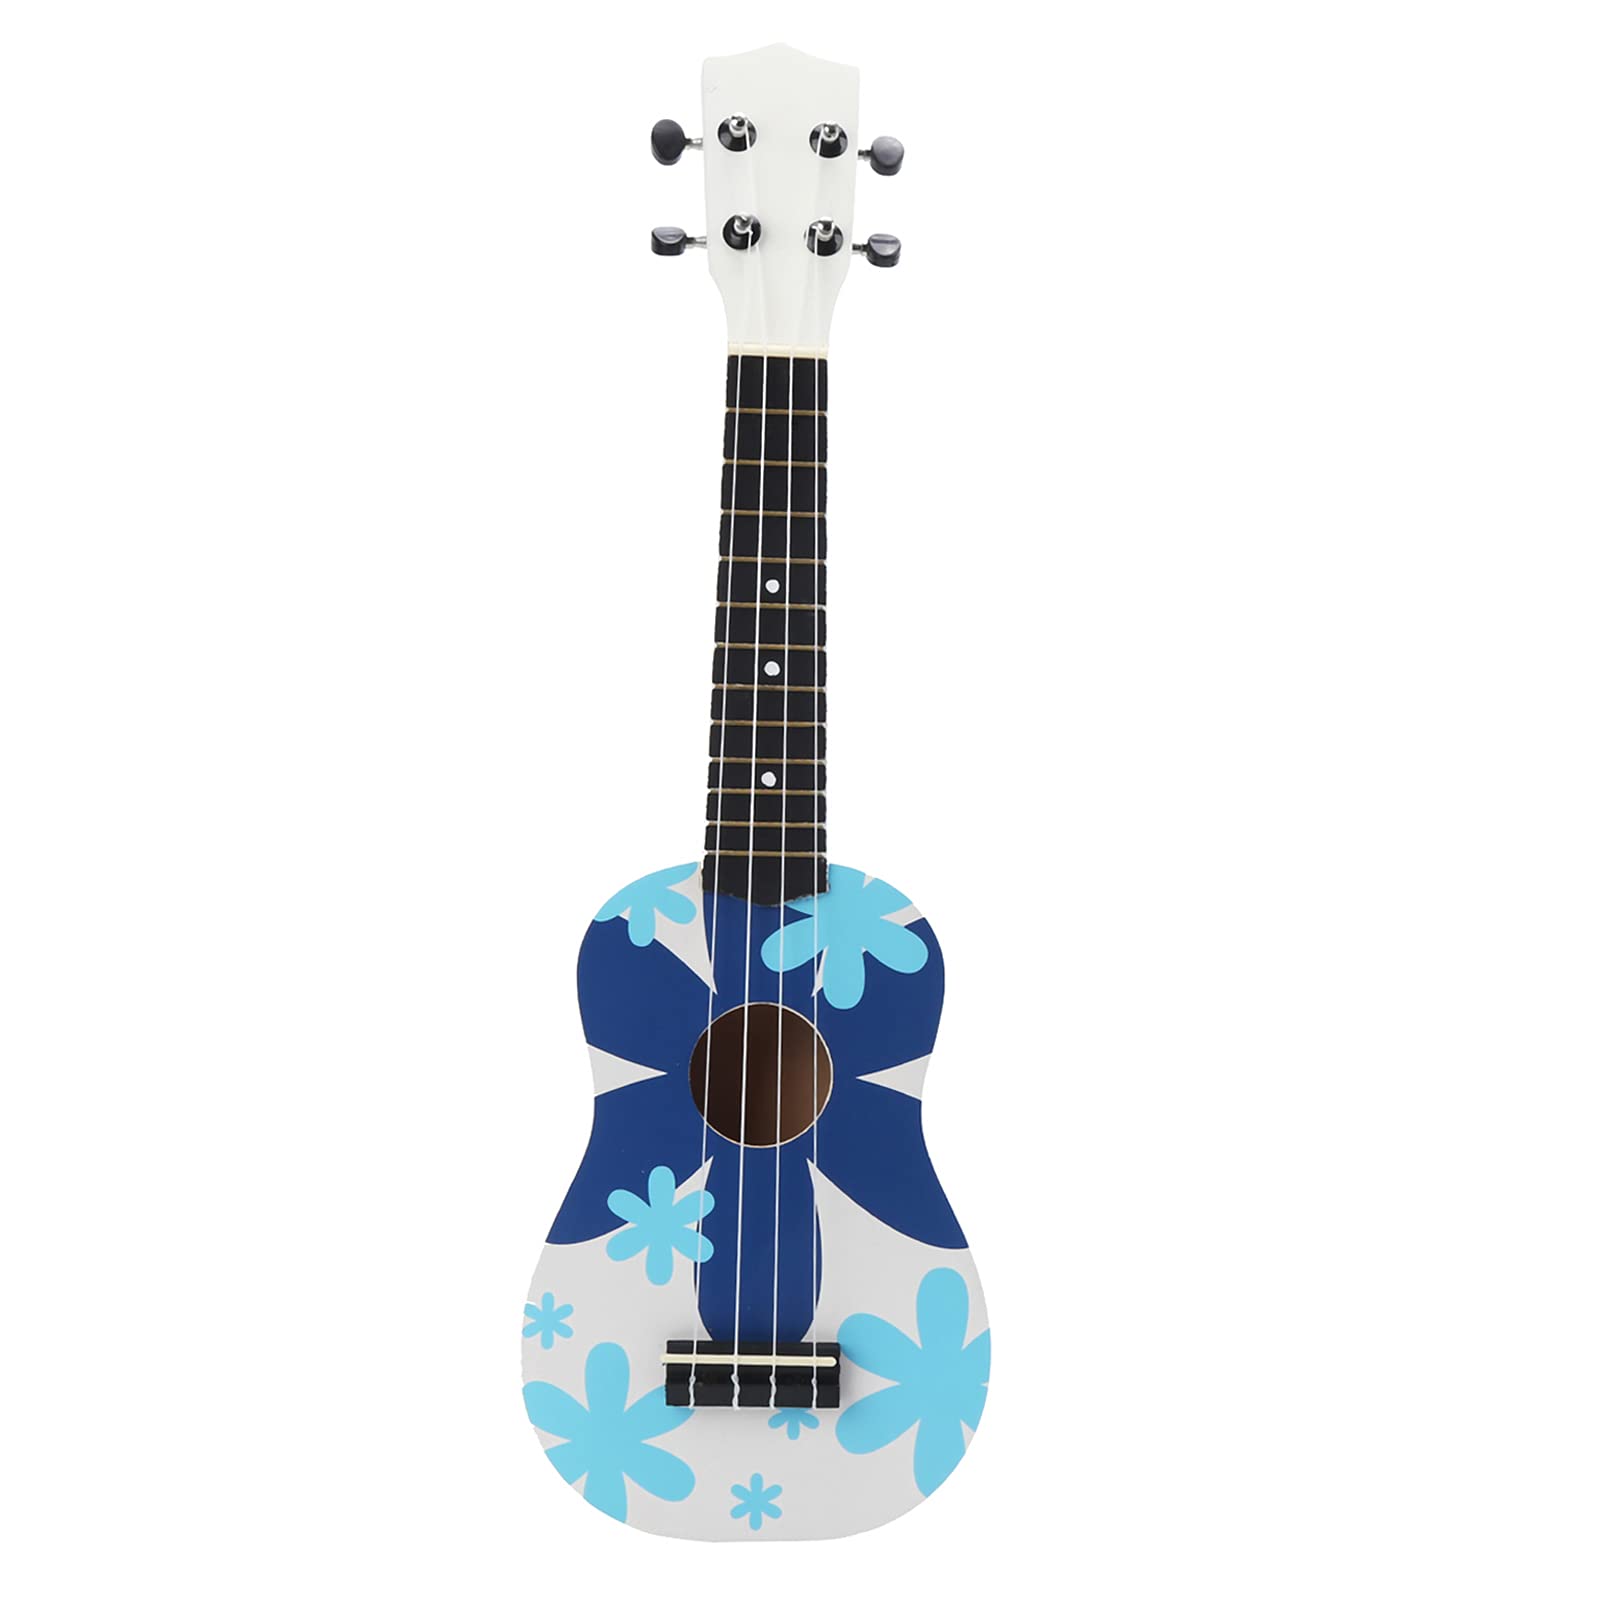 Ukulele 4-saitige Gitarre, leichte Konzert-Ukulele, Mini-Gitarre, Hawaii-Ukulele mit Gigbag, blaue und grüne Muster, 53,3 cm, Ukulele, Musikinstrument für Anfänger, Kinder, Erwachsene, Studenten (#1)